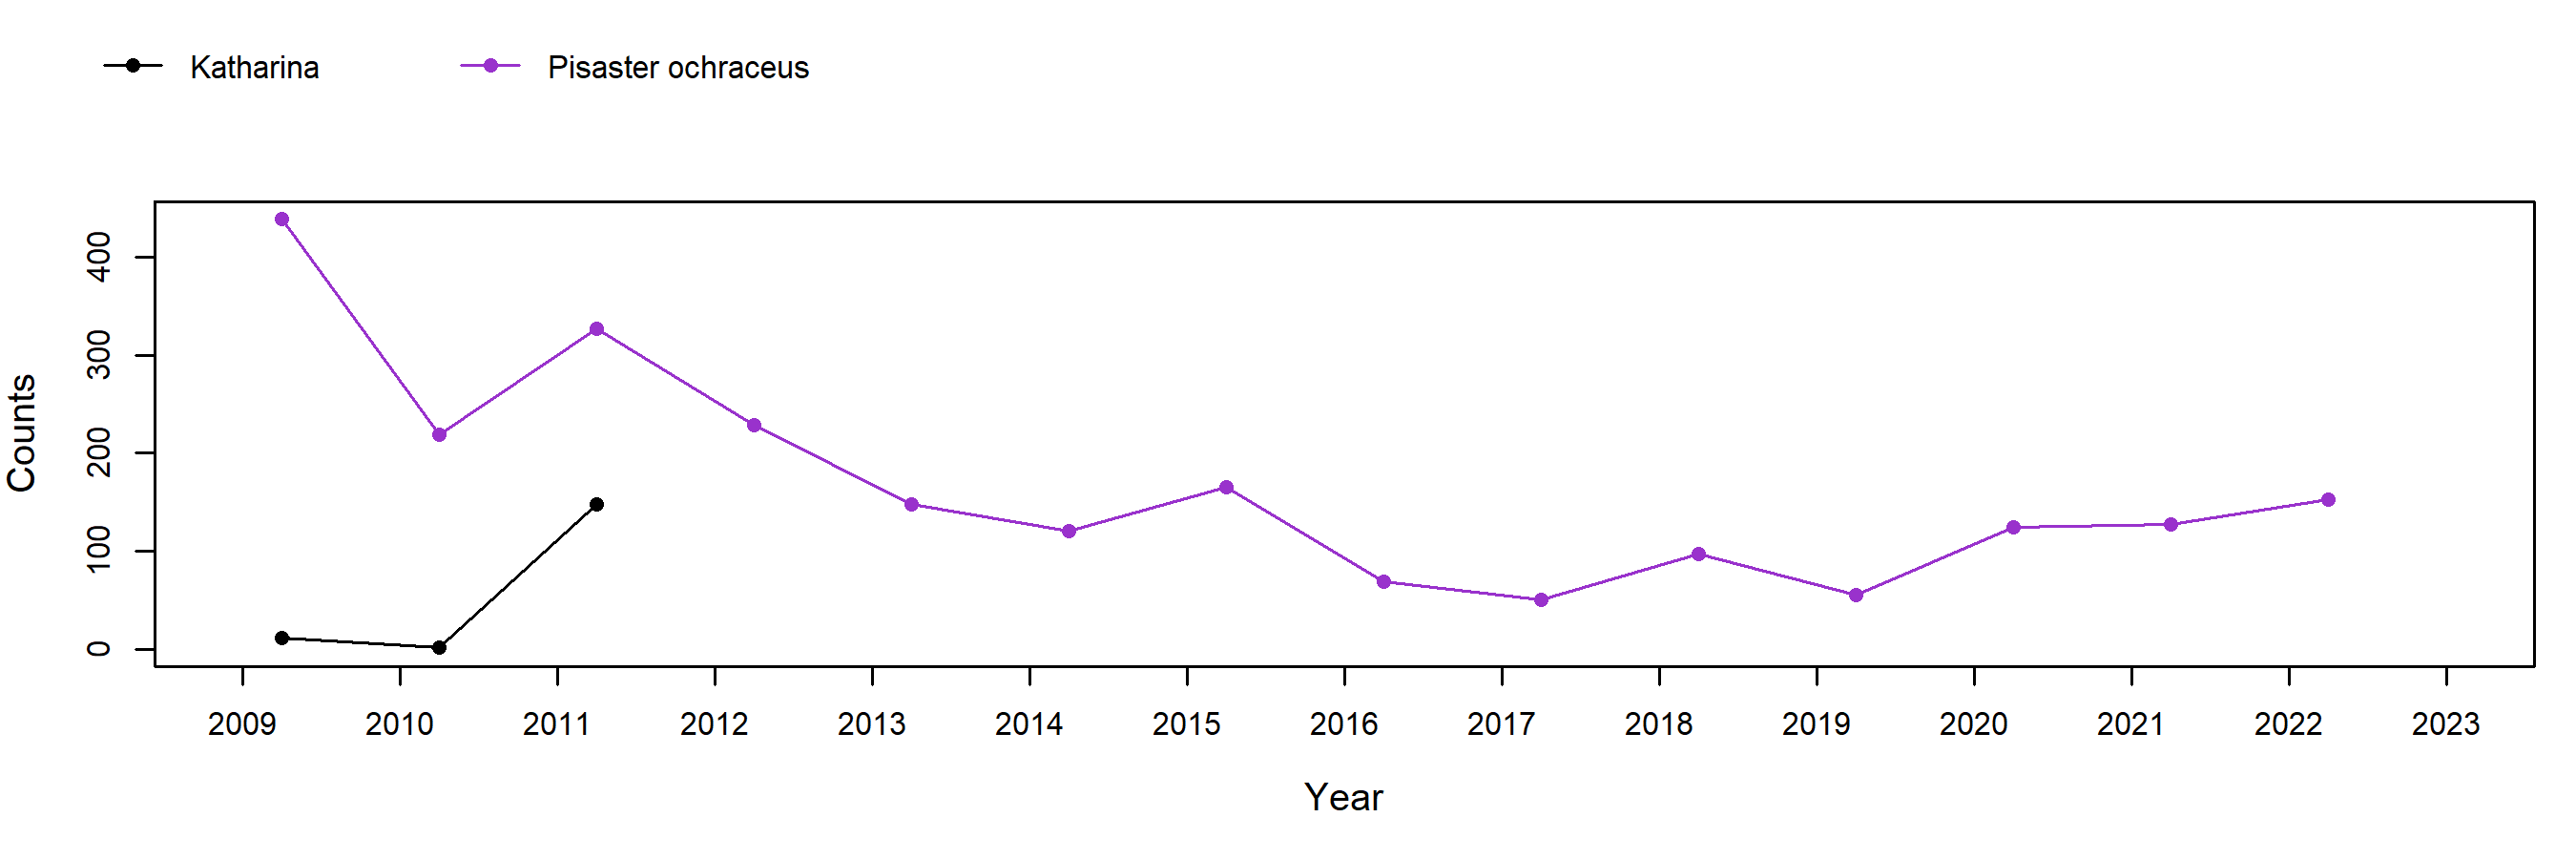 Starfish Point Pisaster trend plot